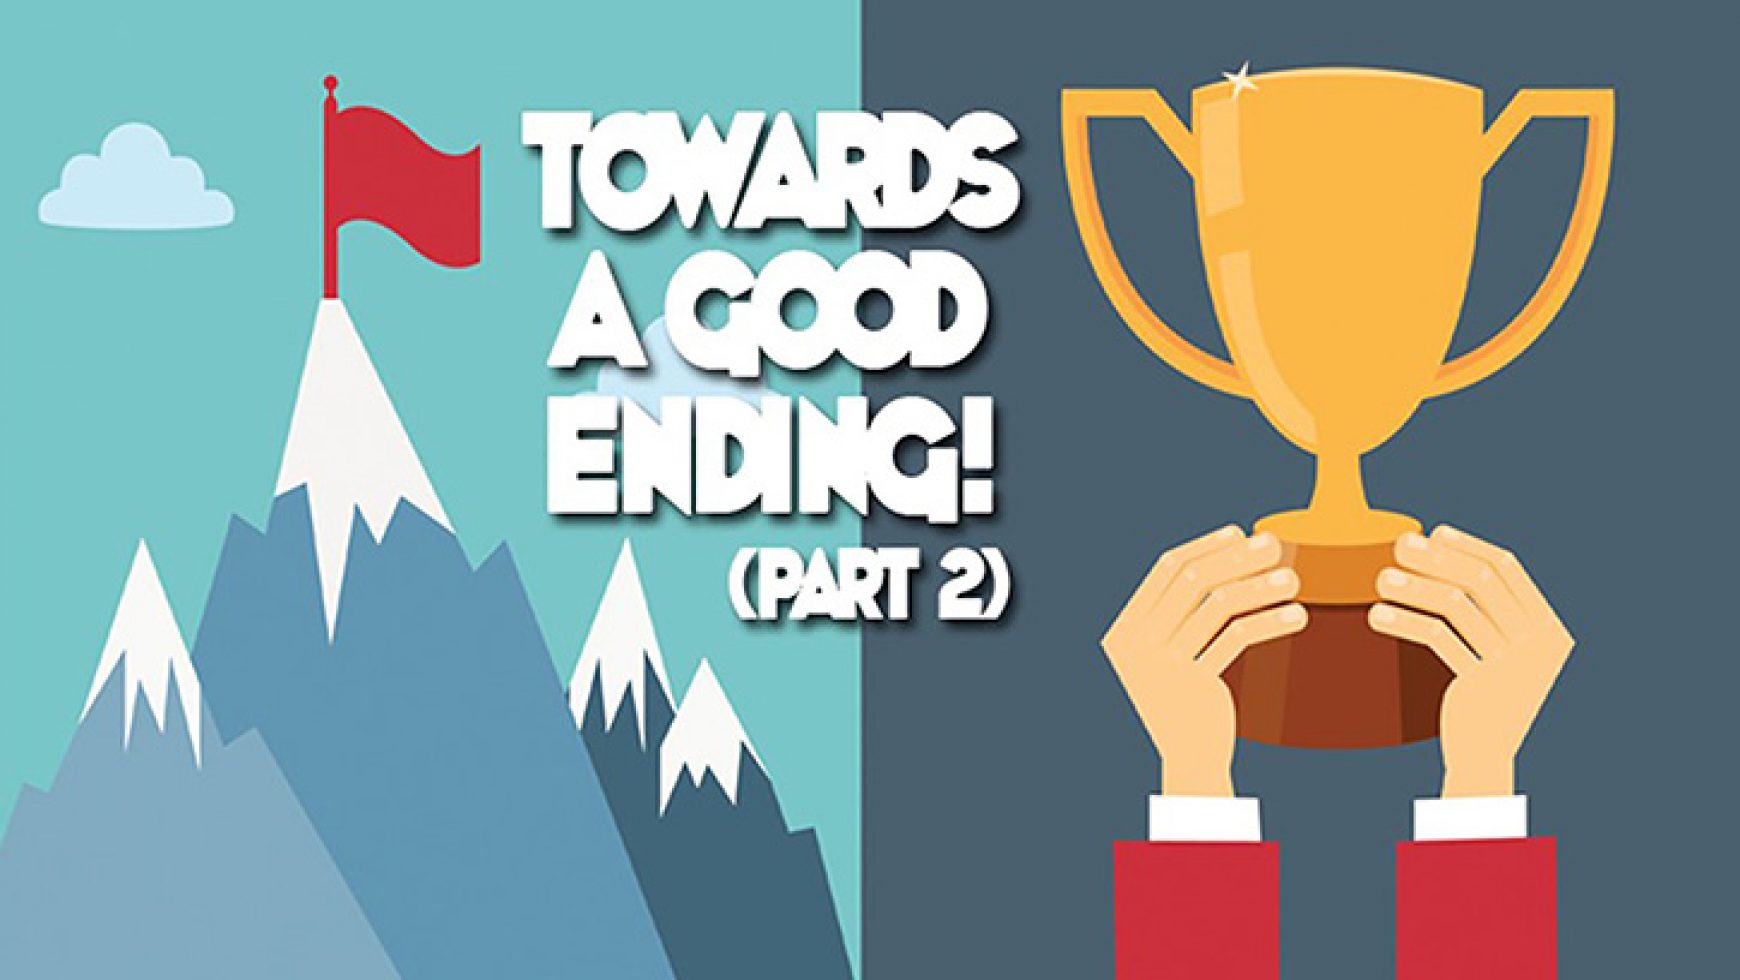 Towards A Good Ending (Part 2)